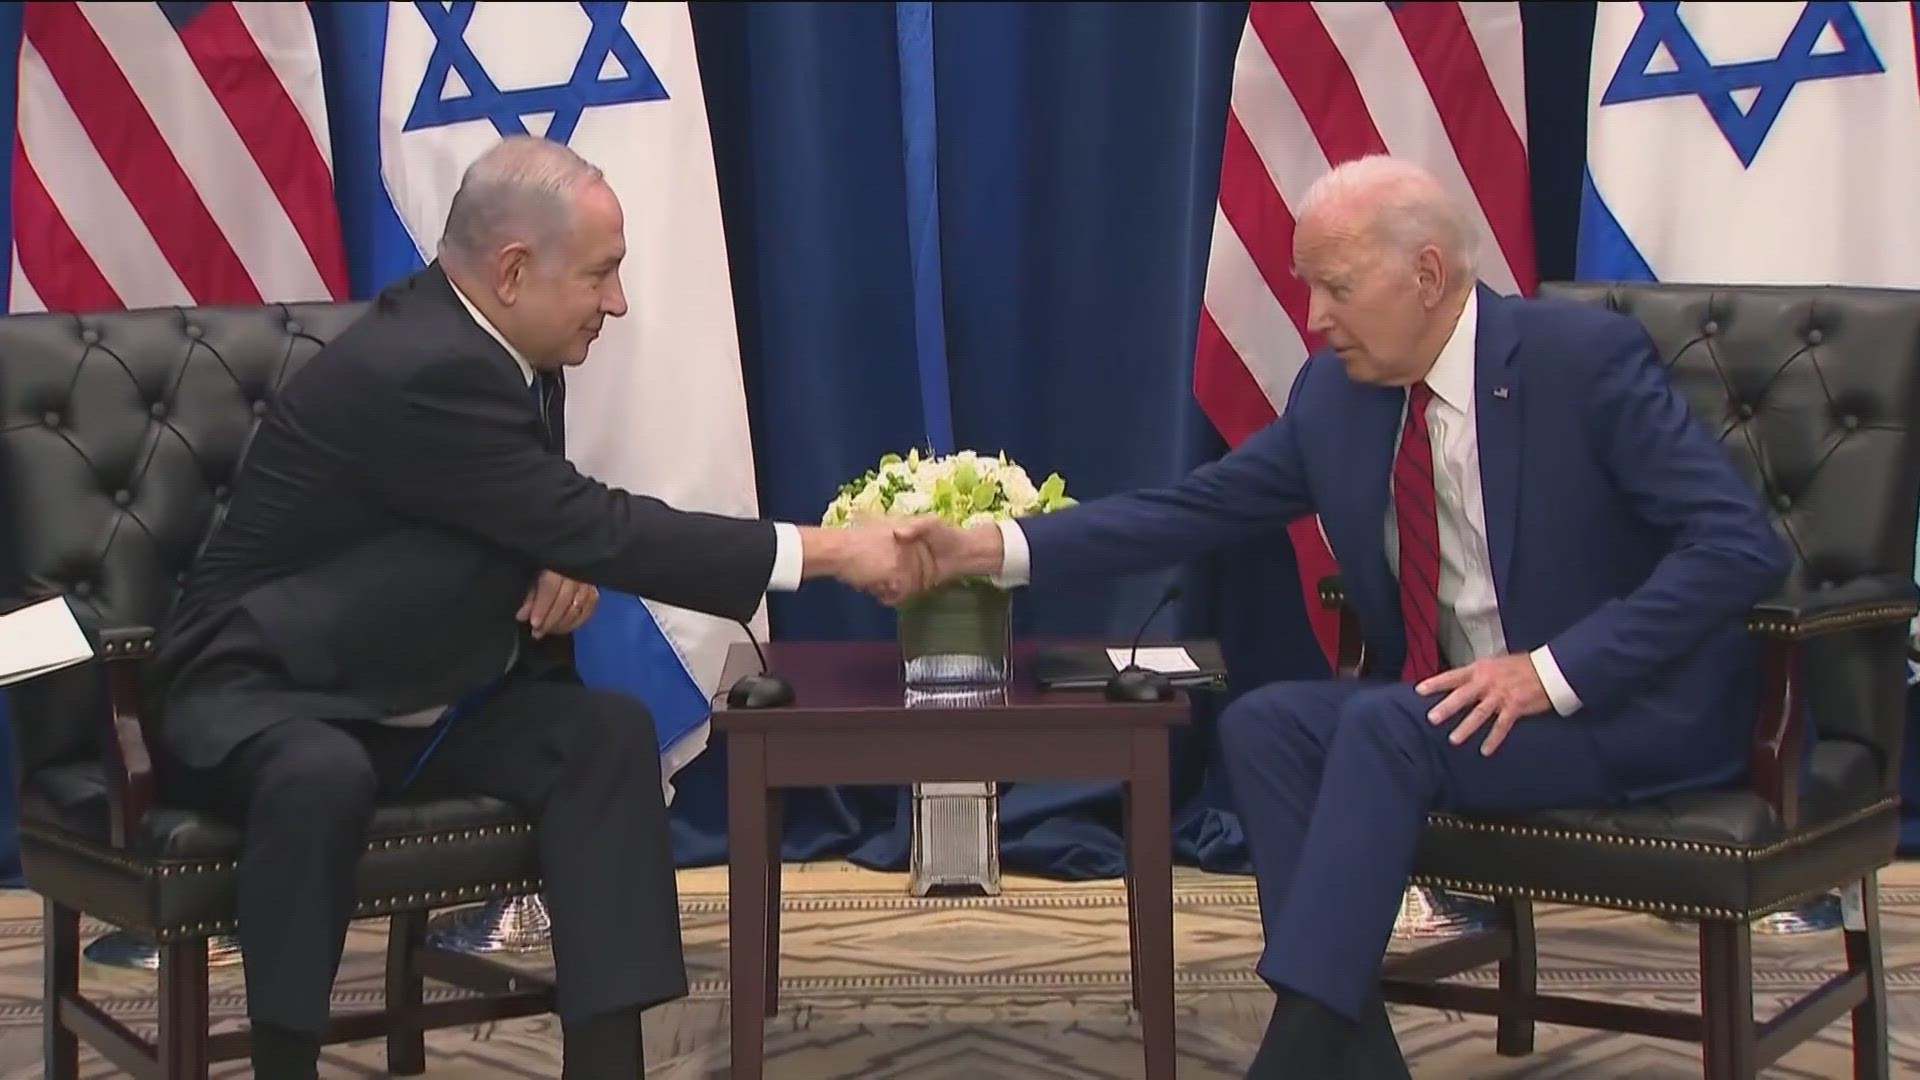 President Joe Biden and Israeli Prime Minister Benjamin Netanyahu exchanged brief praises before holding meetings together in New York City.